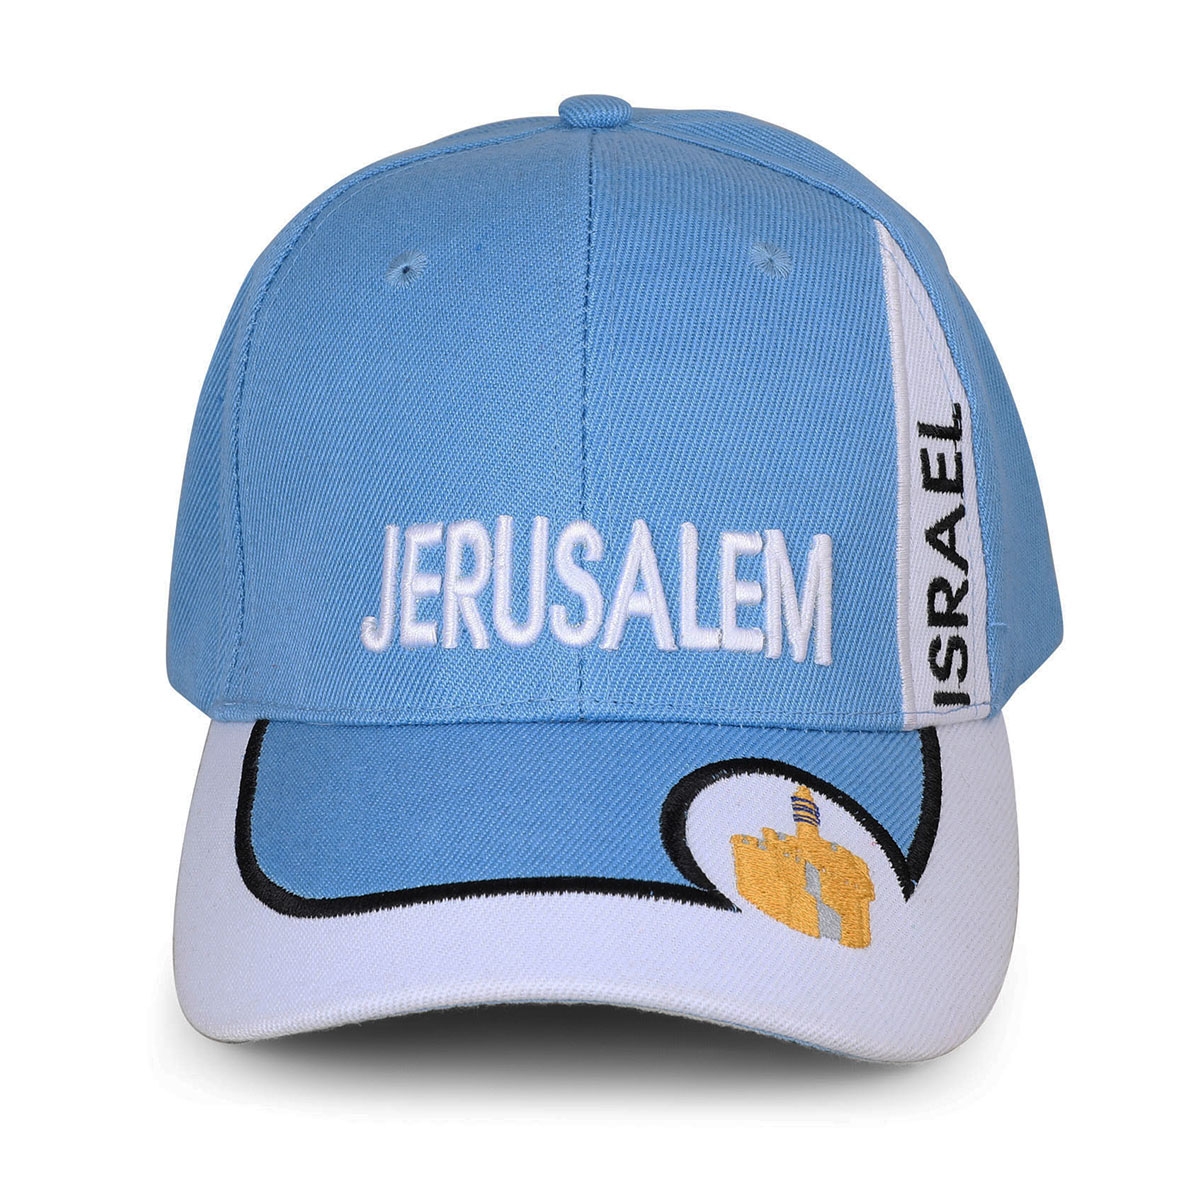 Jerusalem Israel Baseball Cap – Light Blue and White  - 1